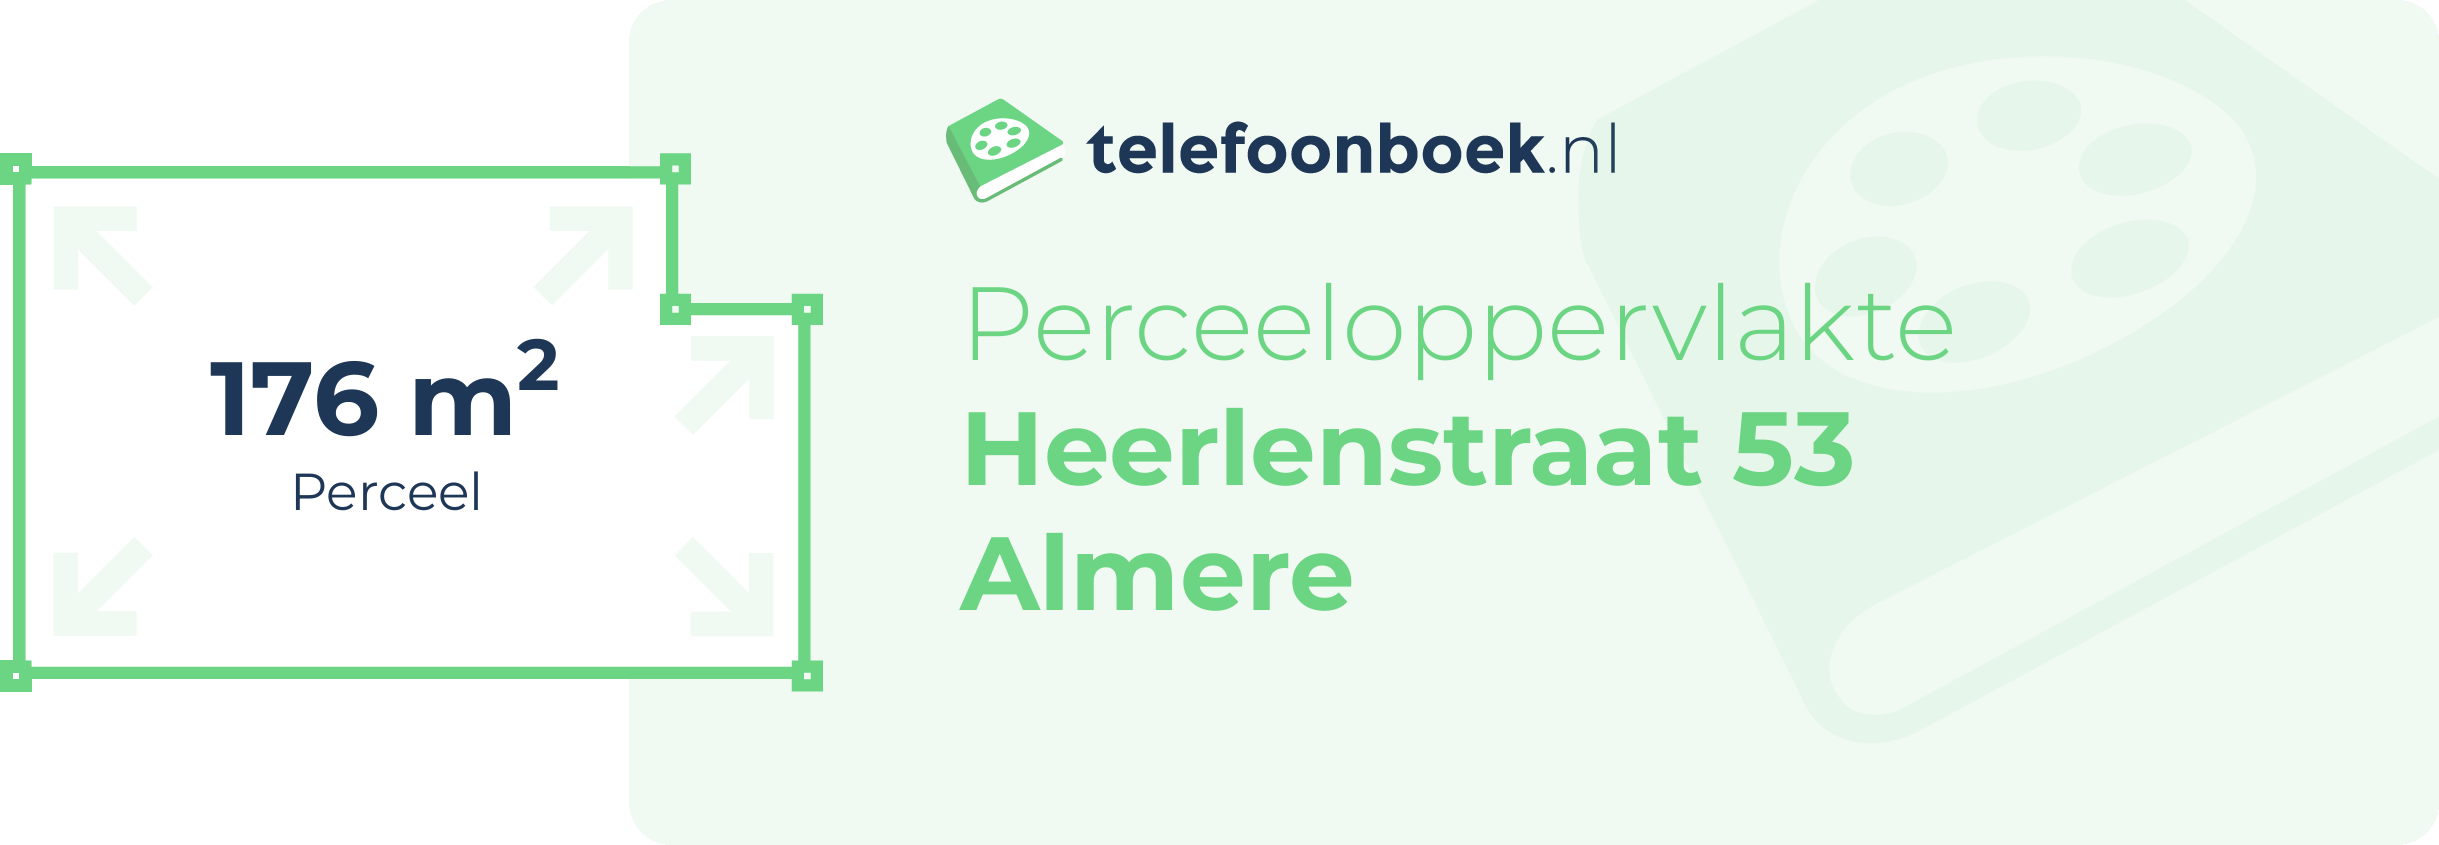 Perceeloppervlakte Heerlenstraat 53 Almere